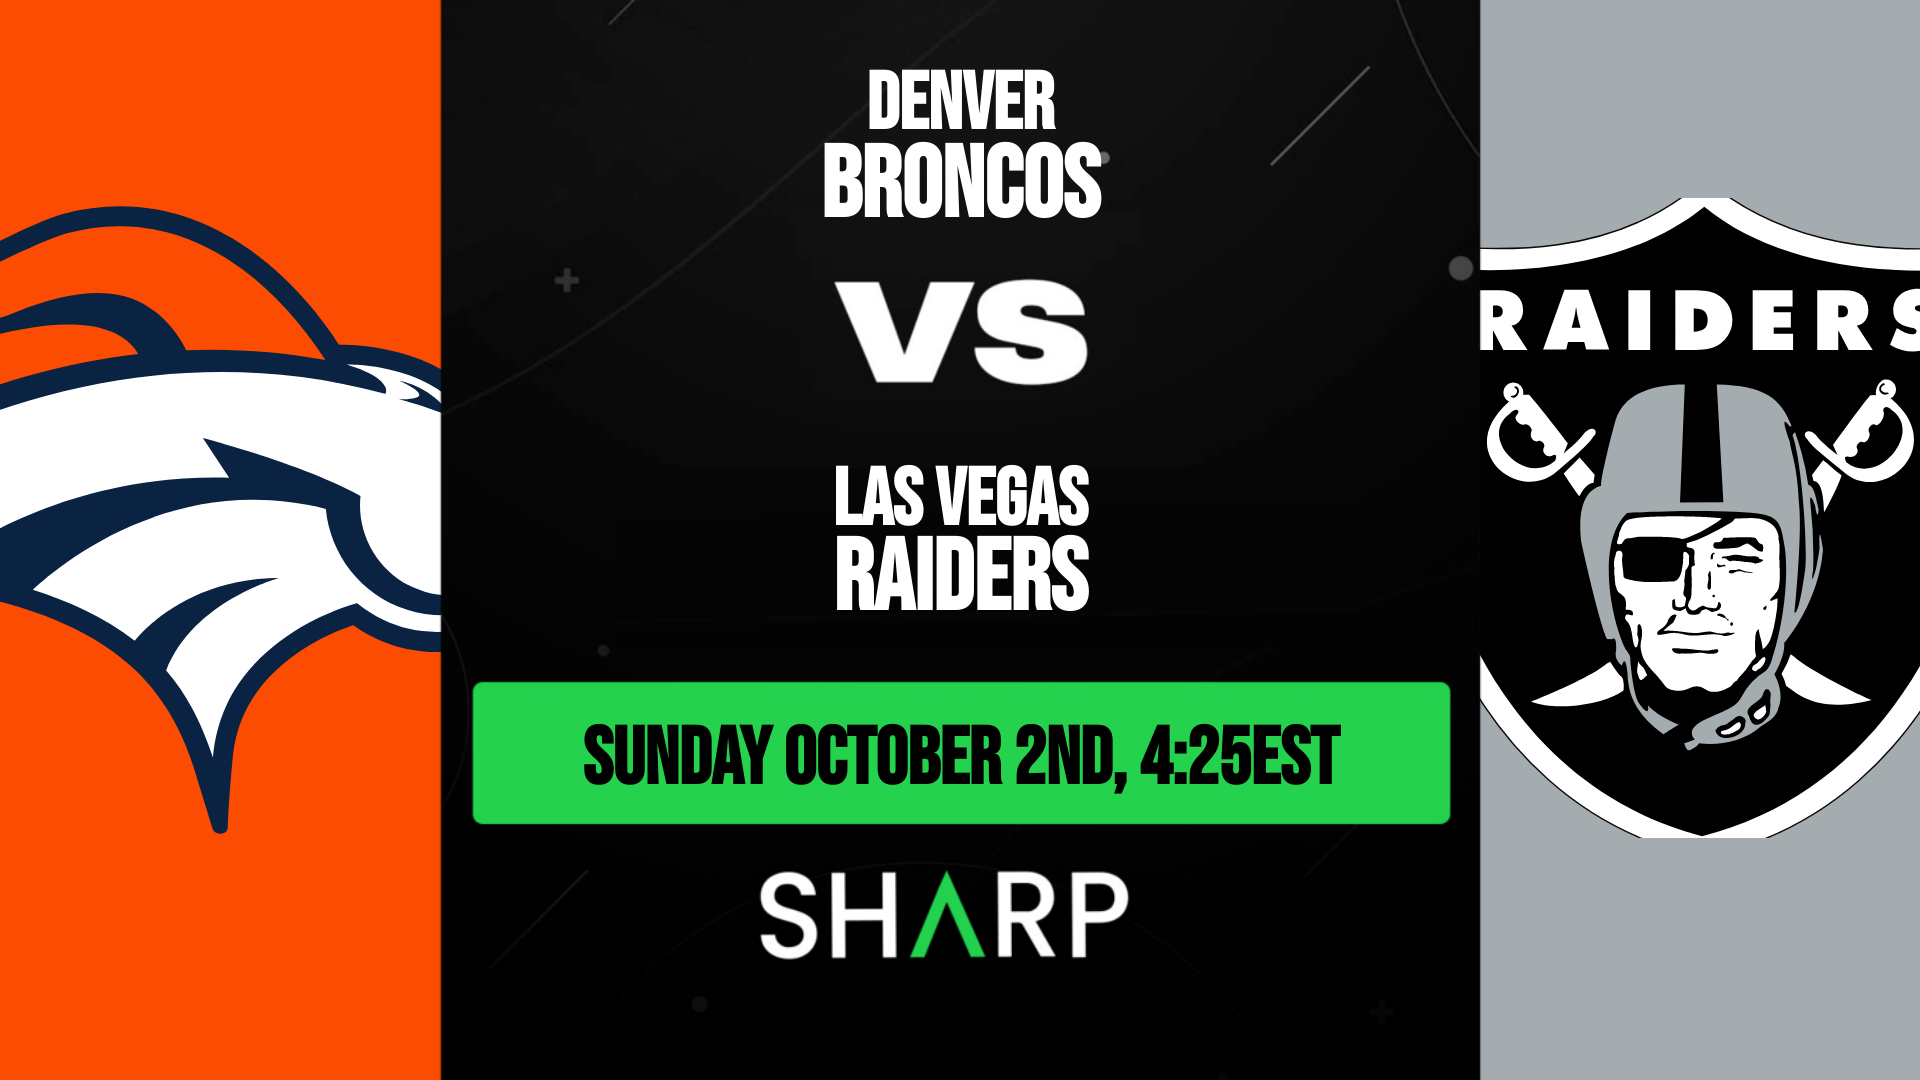 Denver Broncos vs Las Vegas Raiders Matchup Preview - October 2nd, 2022